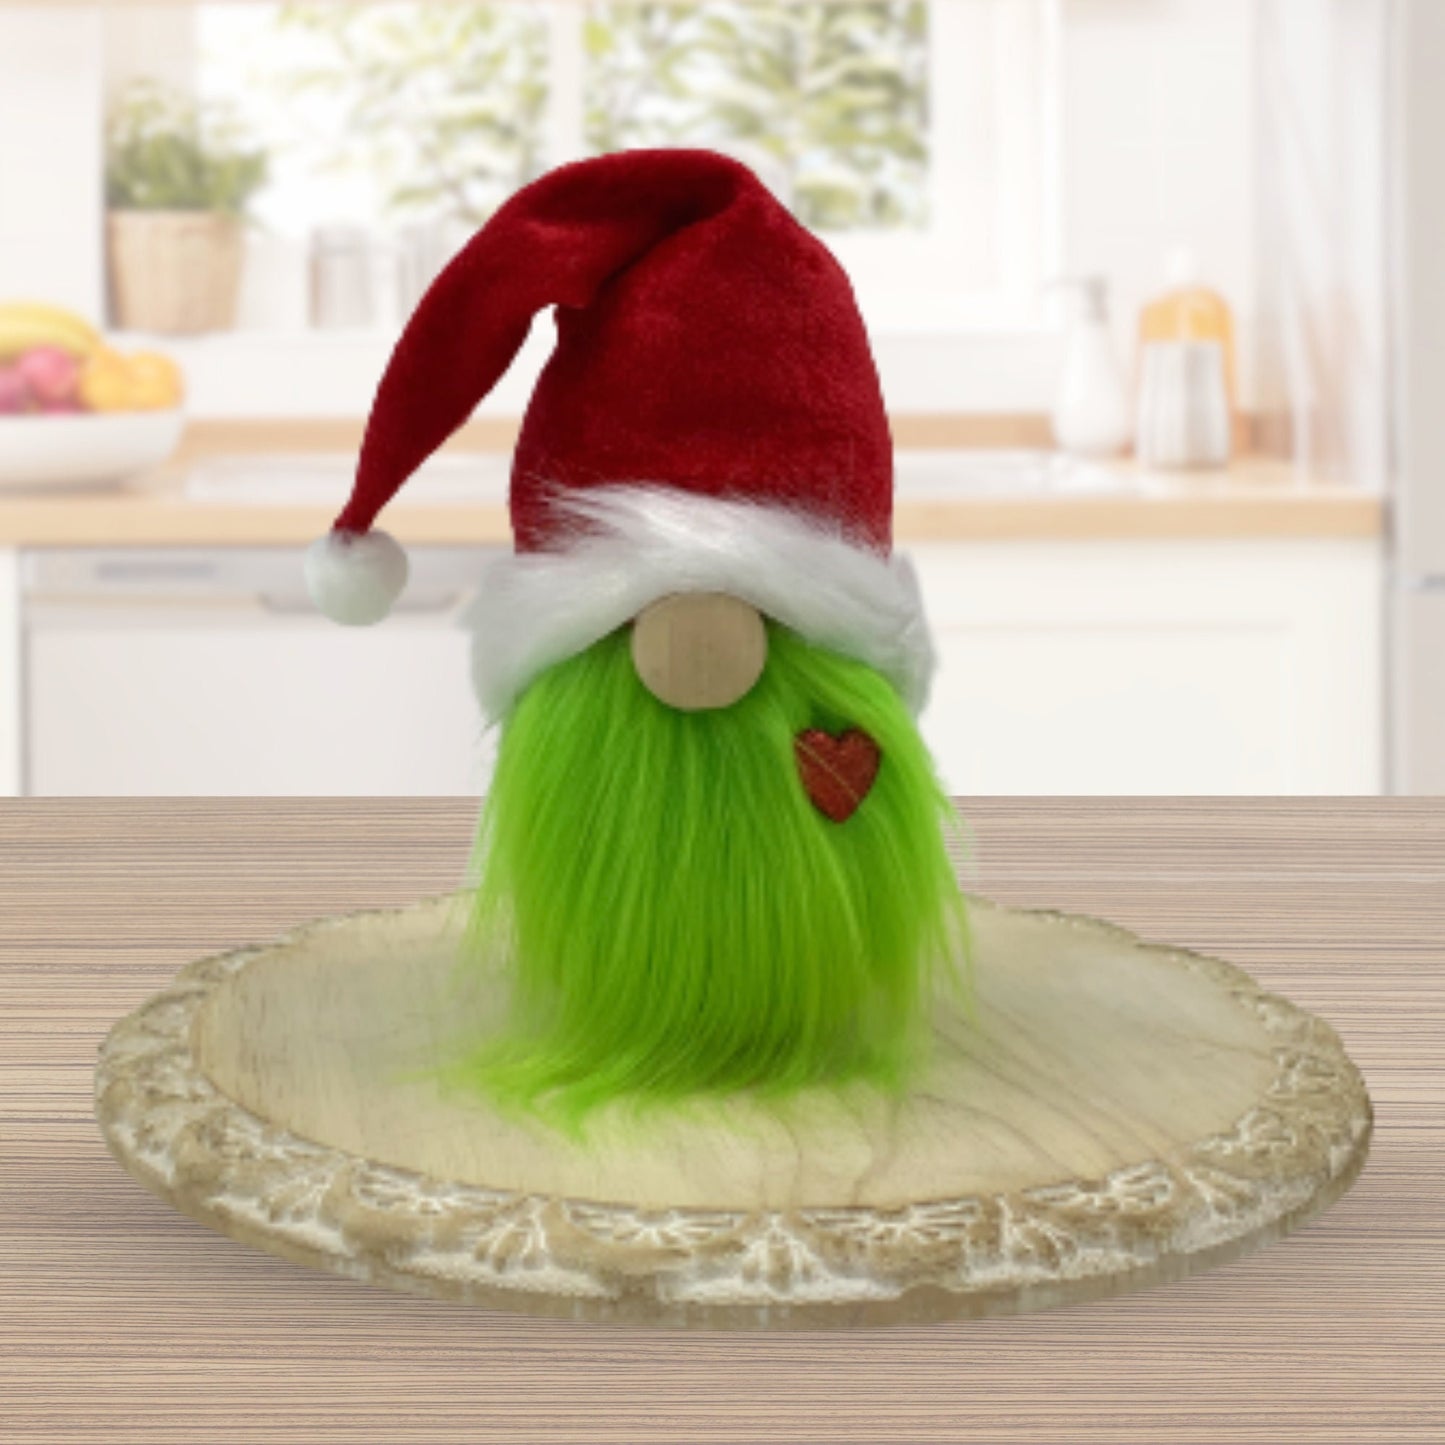 Grumpy Green Gnome / Christmas Tiered Tray Decor / Winter Gnome Decorations